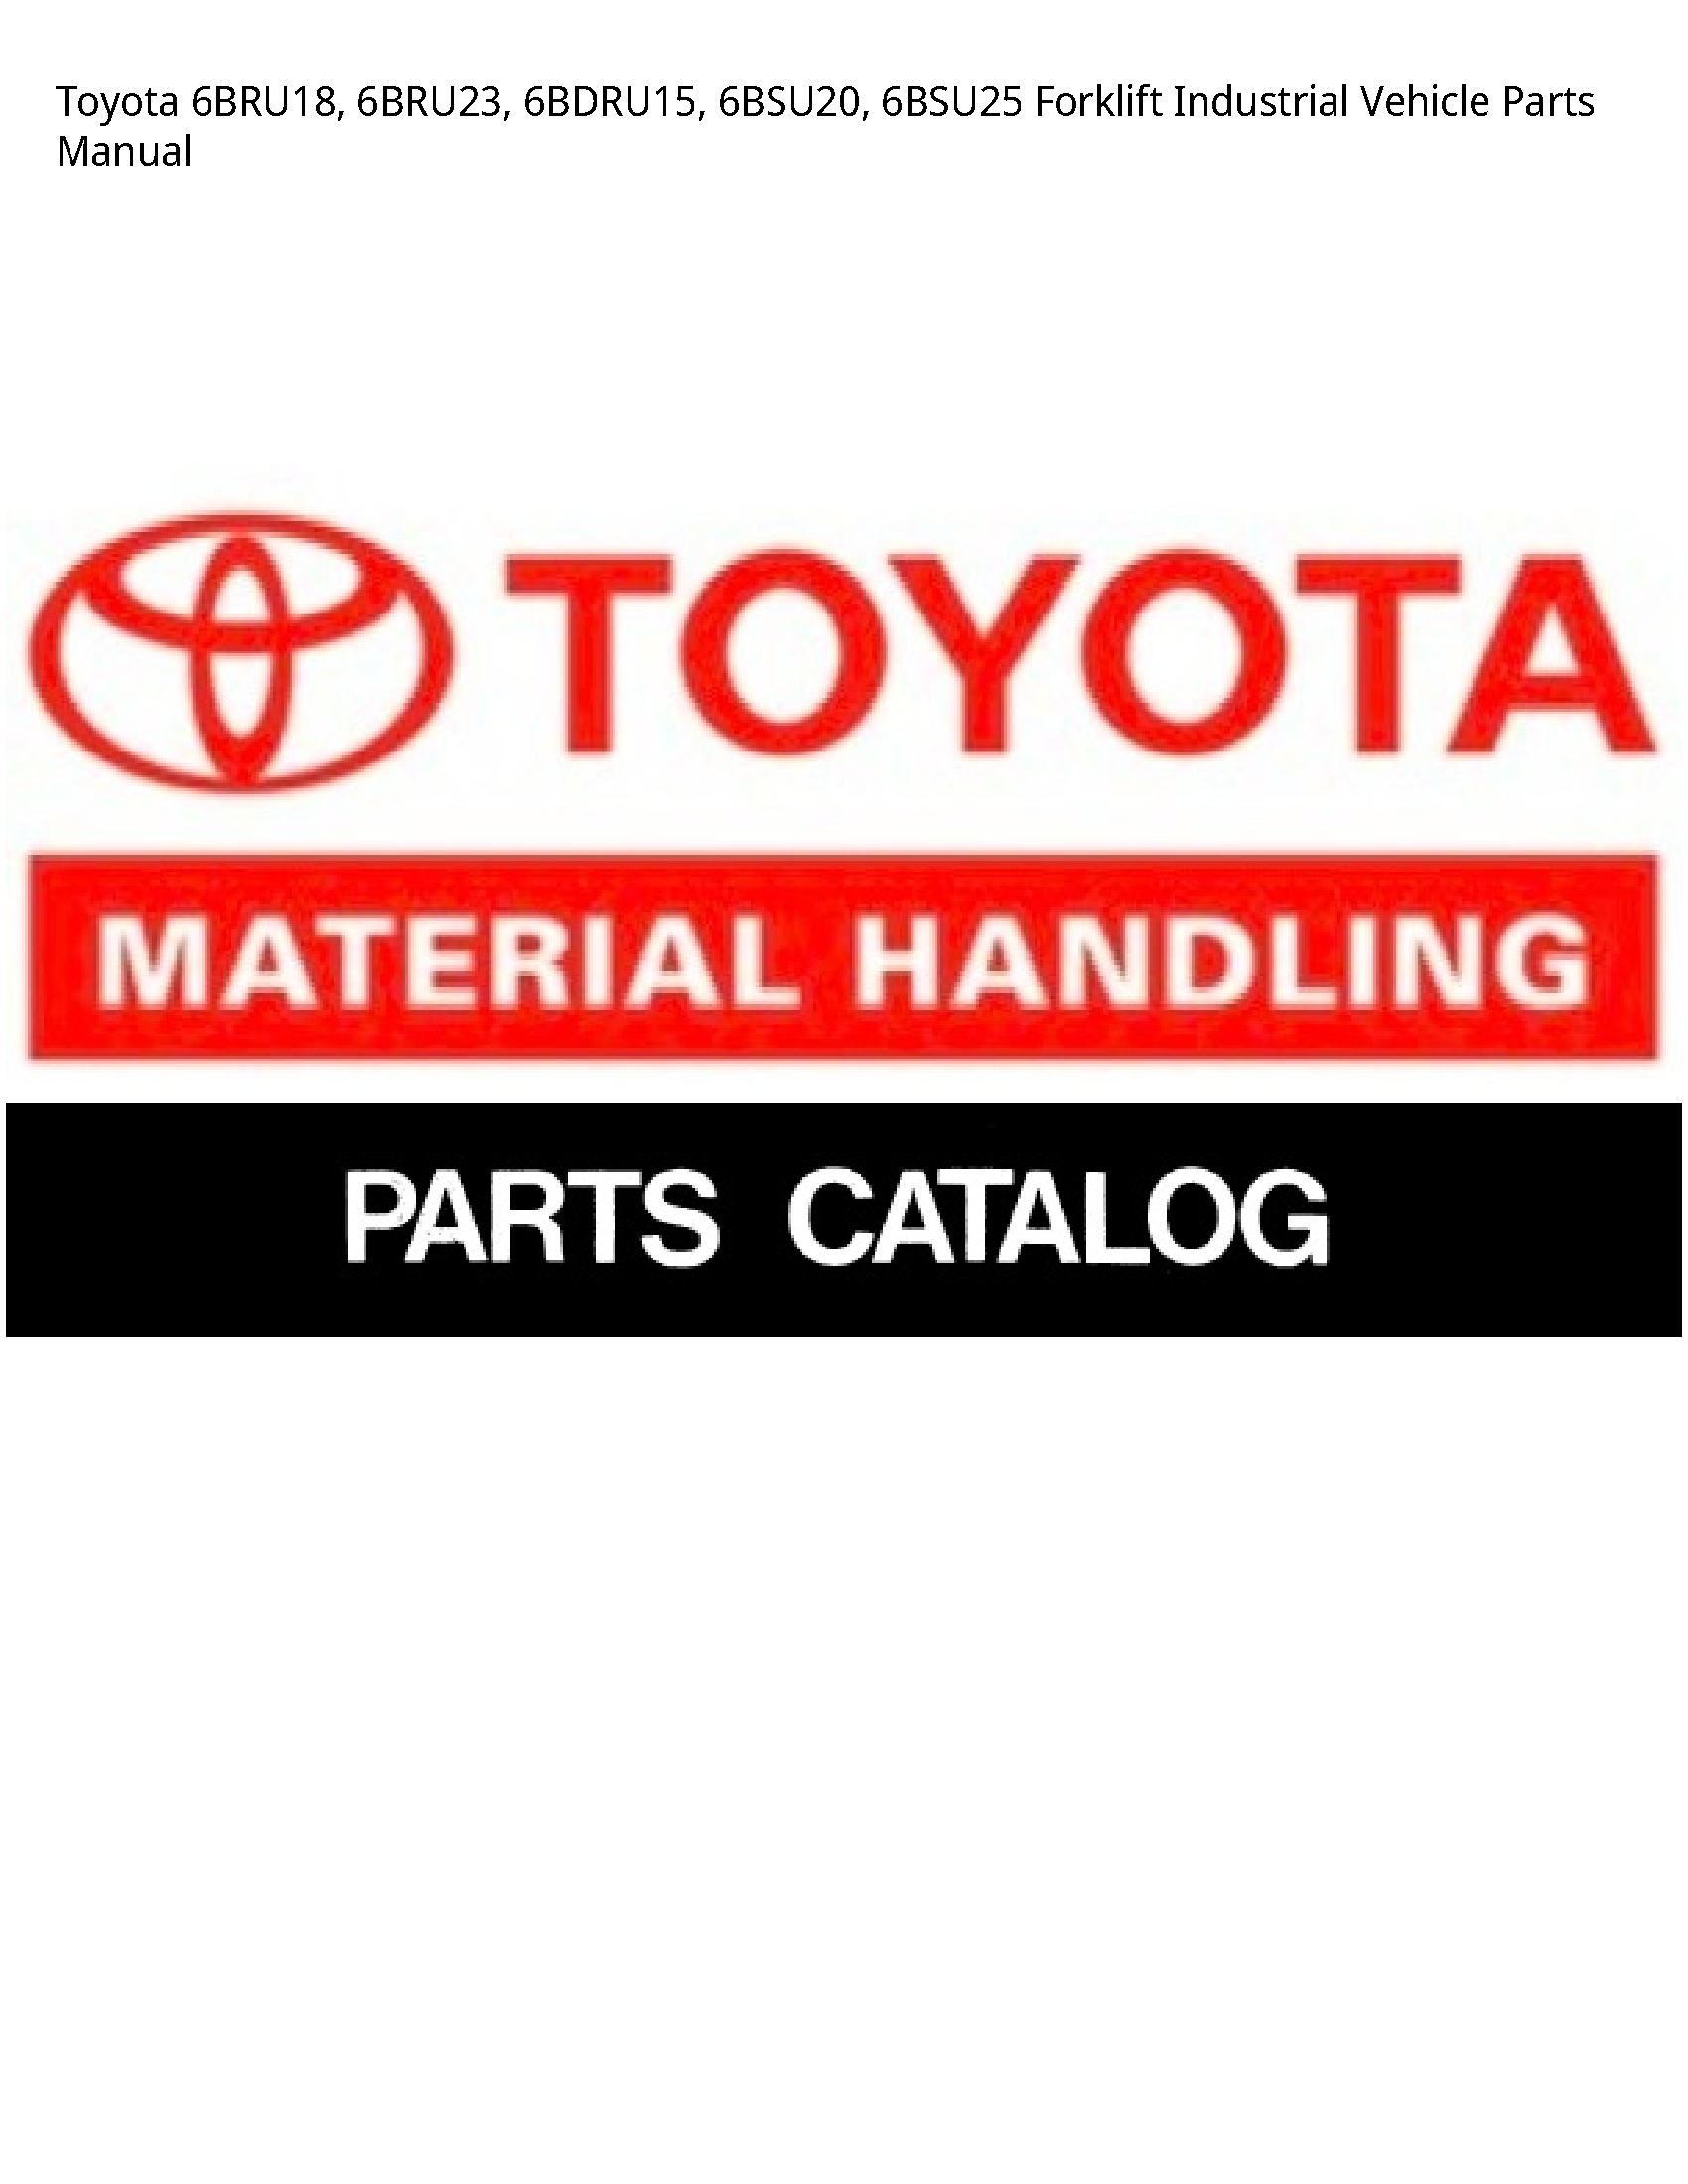 Toyota 6BRU18 Forklift Industrial Vehicle Parts manual